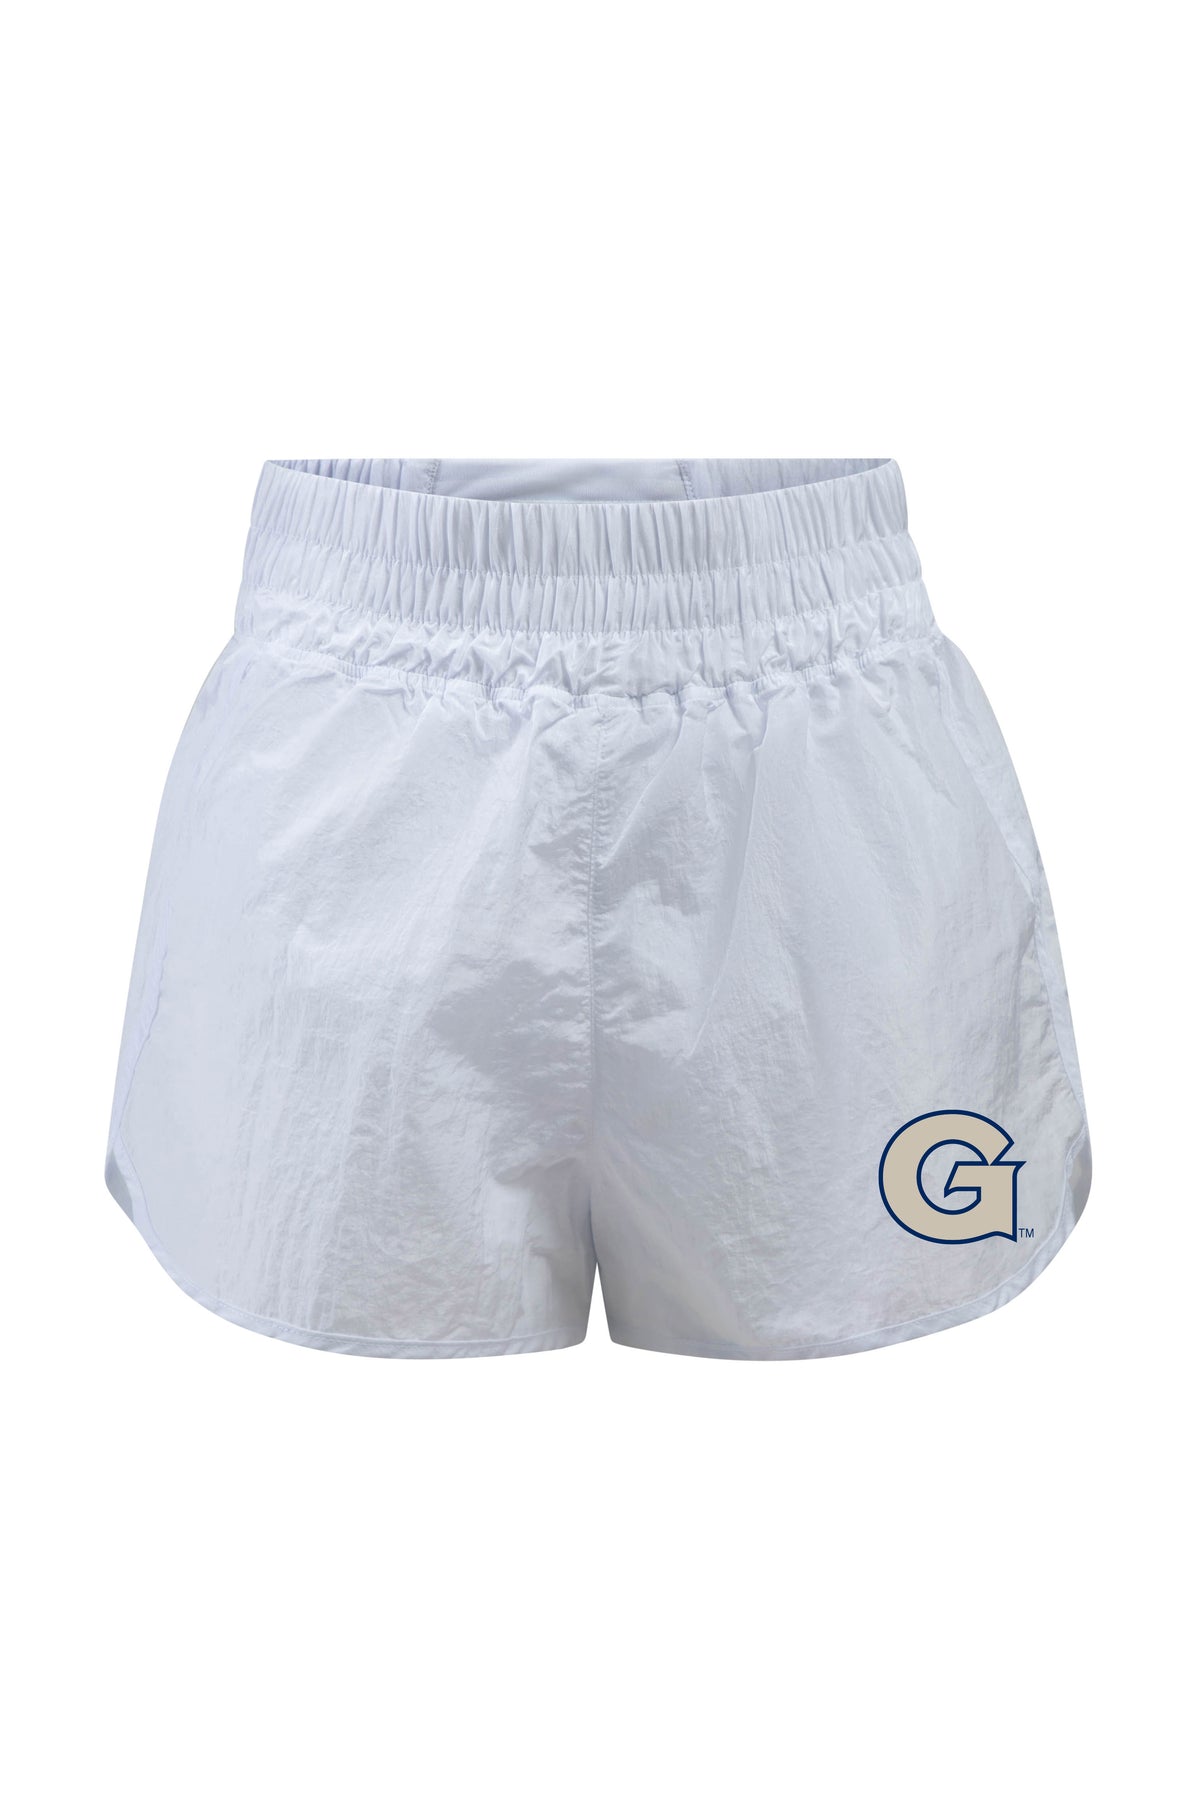 Georgetown University Boxer Short